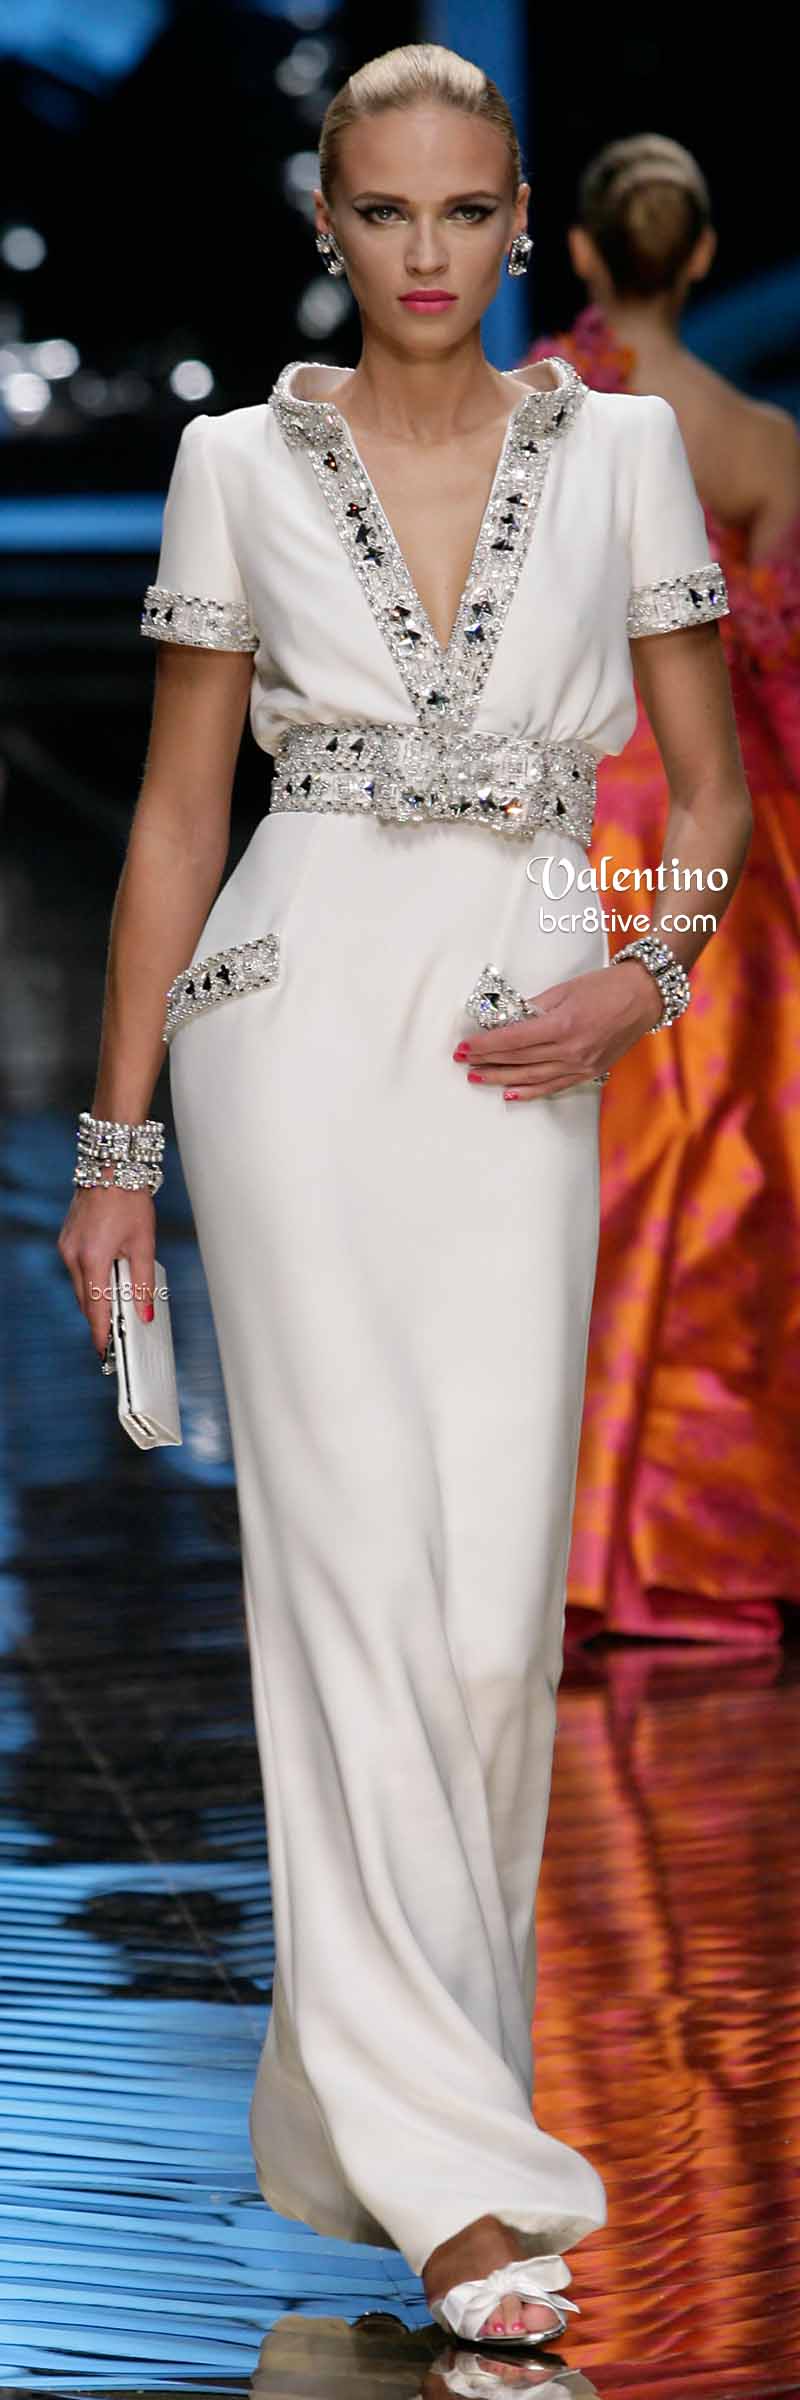 White Lavishly Embezzled Valentino Gown